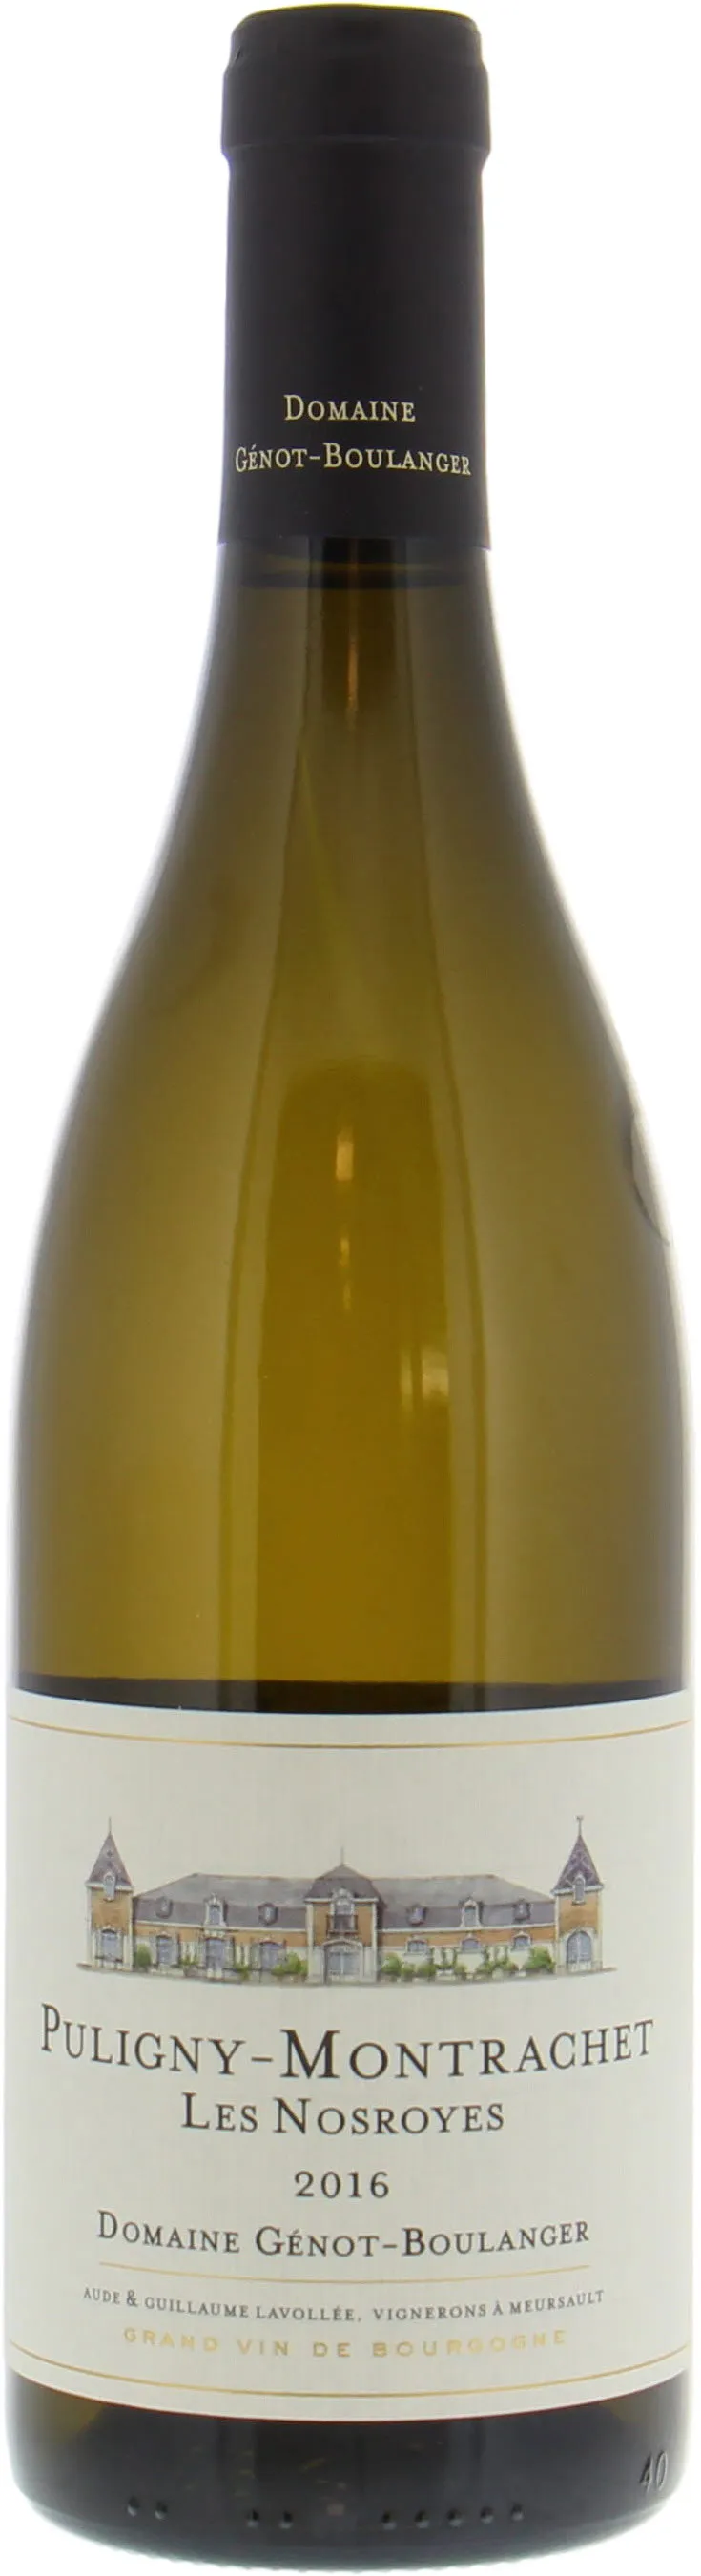 Bottle of Domaine Génot-Boulanger Puligny-Montrachet Les Nosroyeswith label visible